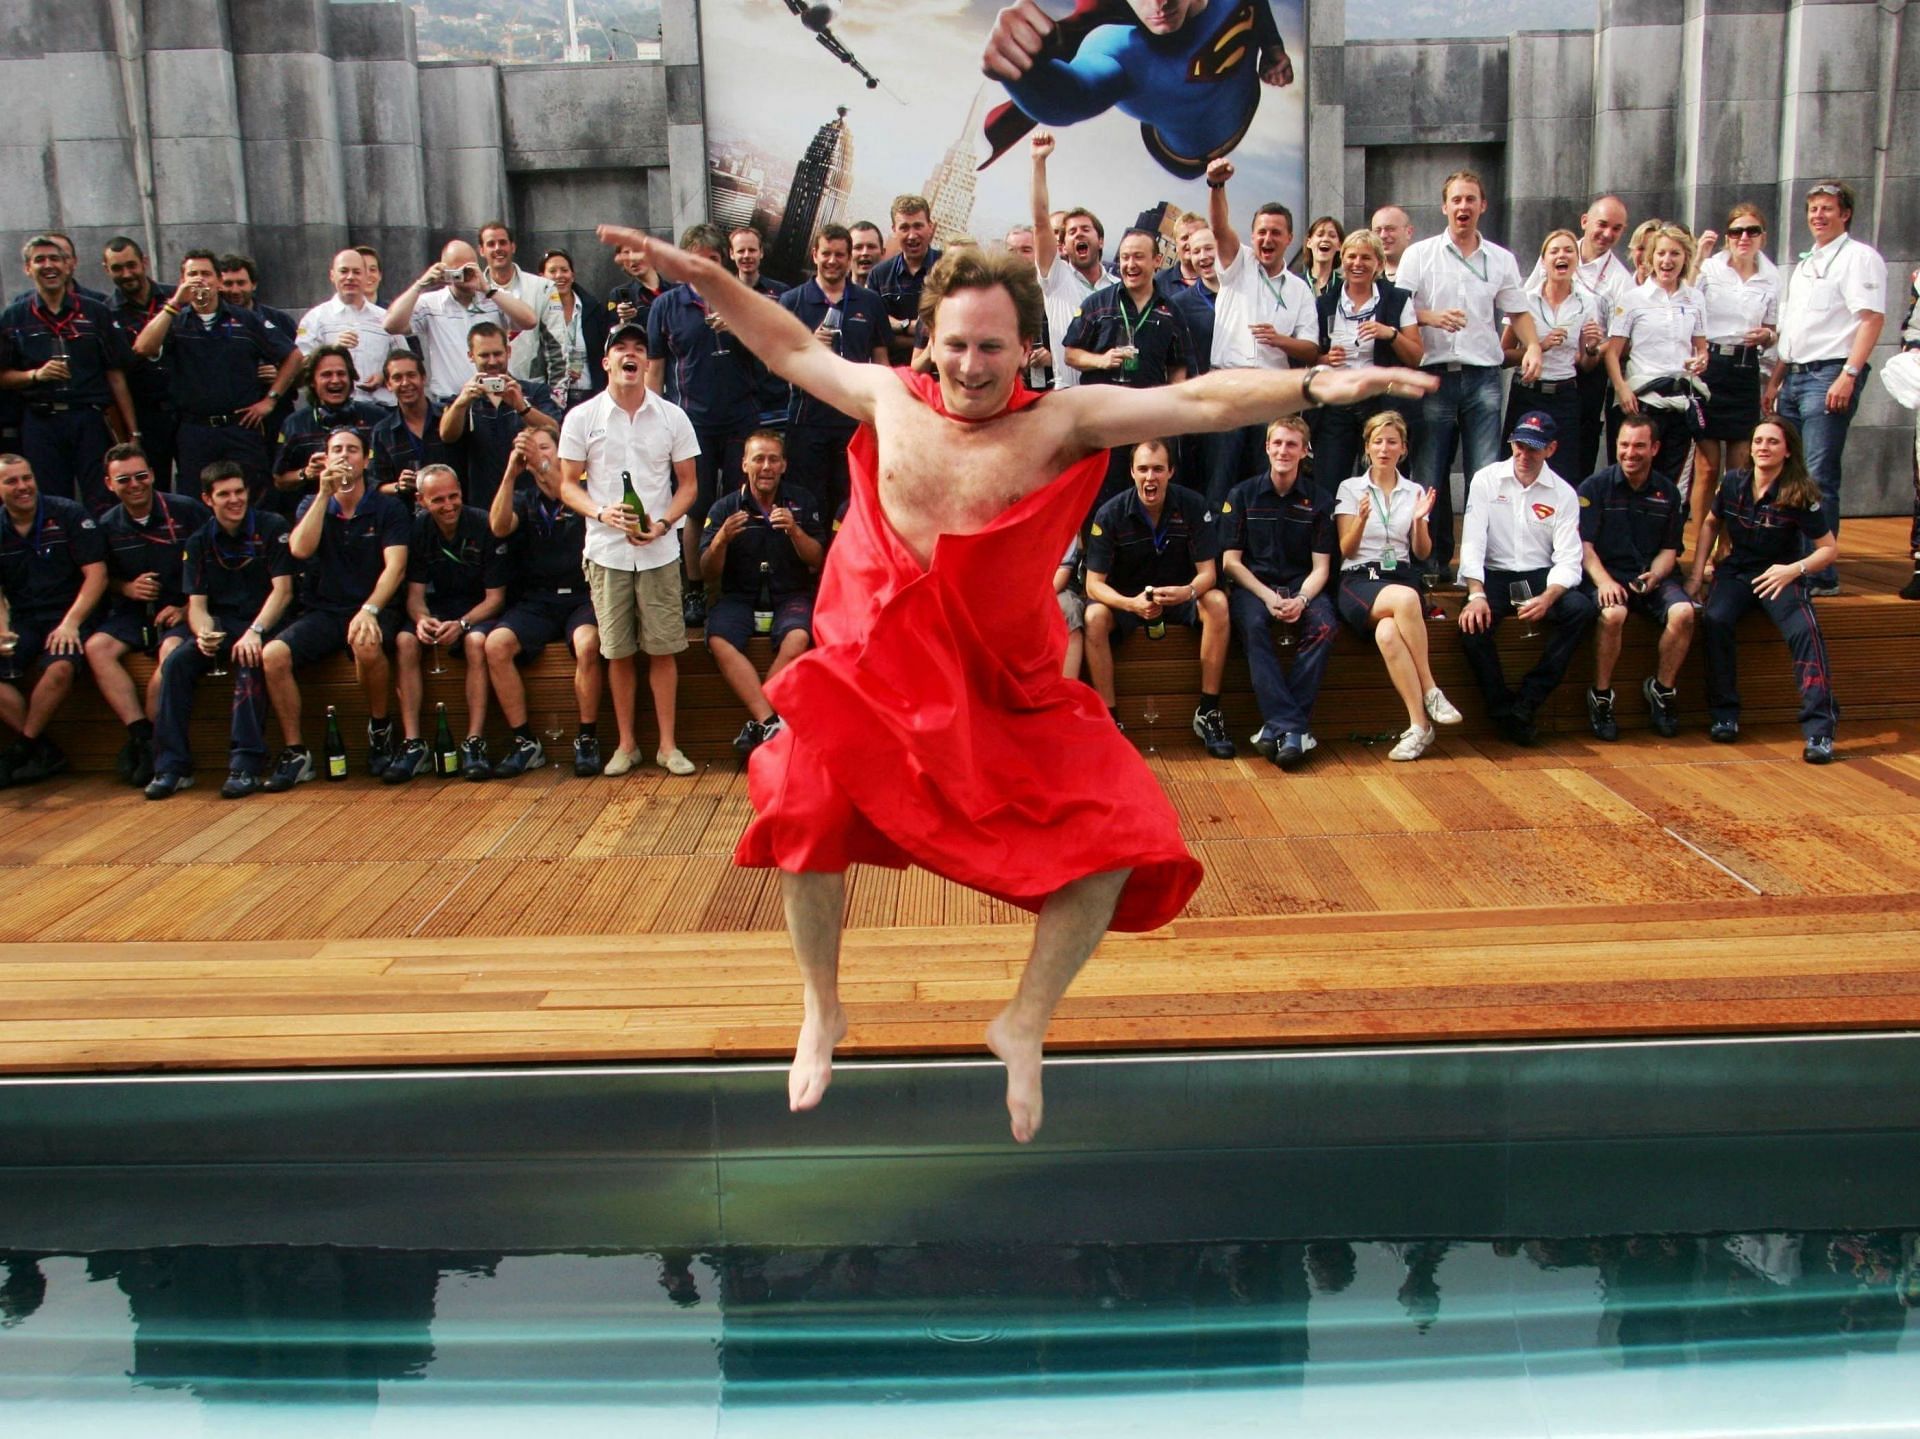 Half naked Christian Horner jumping in the swimming pool after the 2006 F1 Monaco Grand Prix (Image via Reddit / u/TVInBlackNWhite)